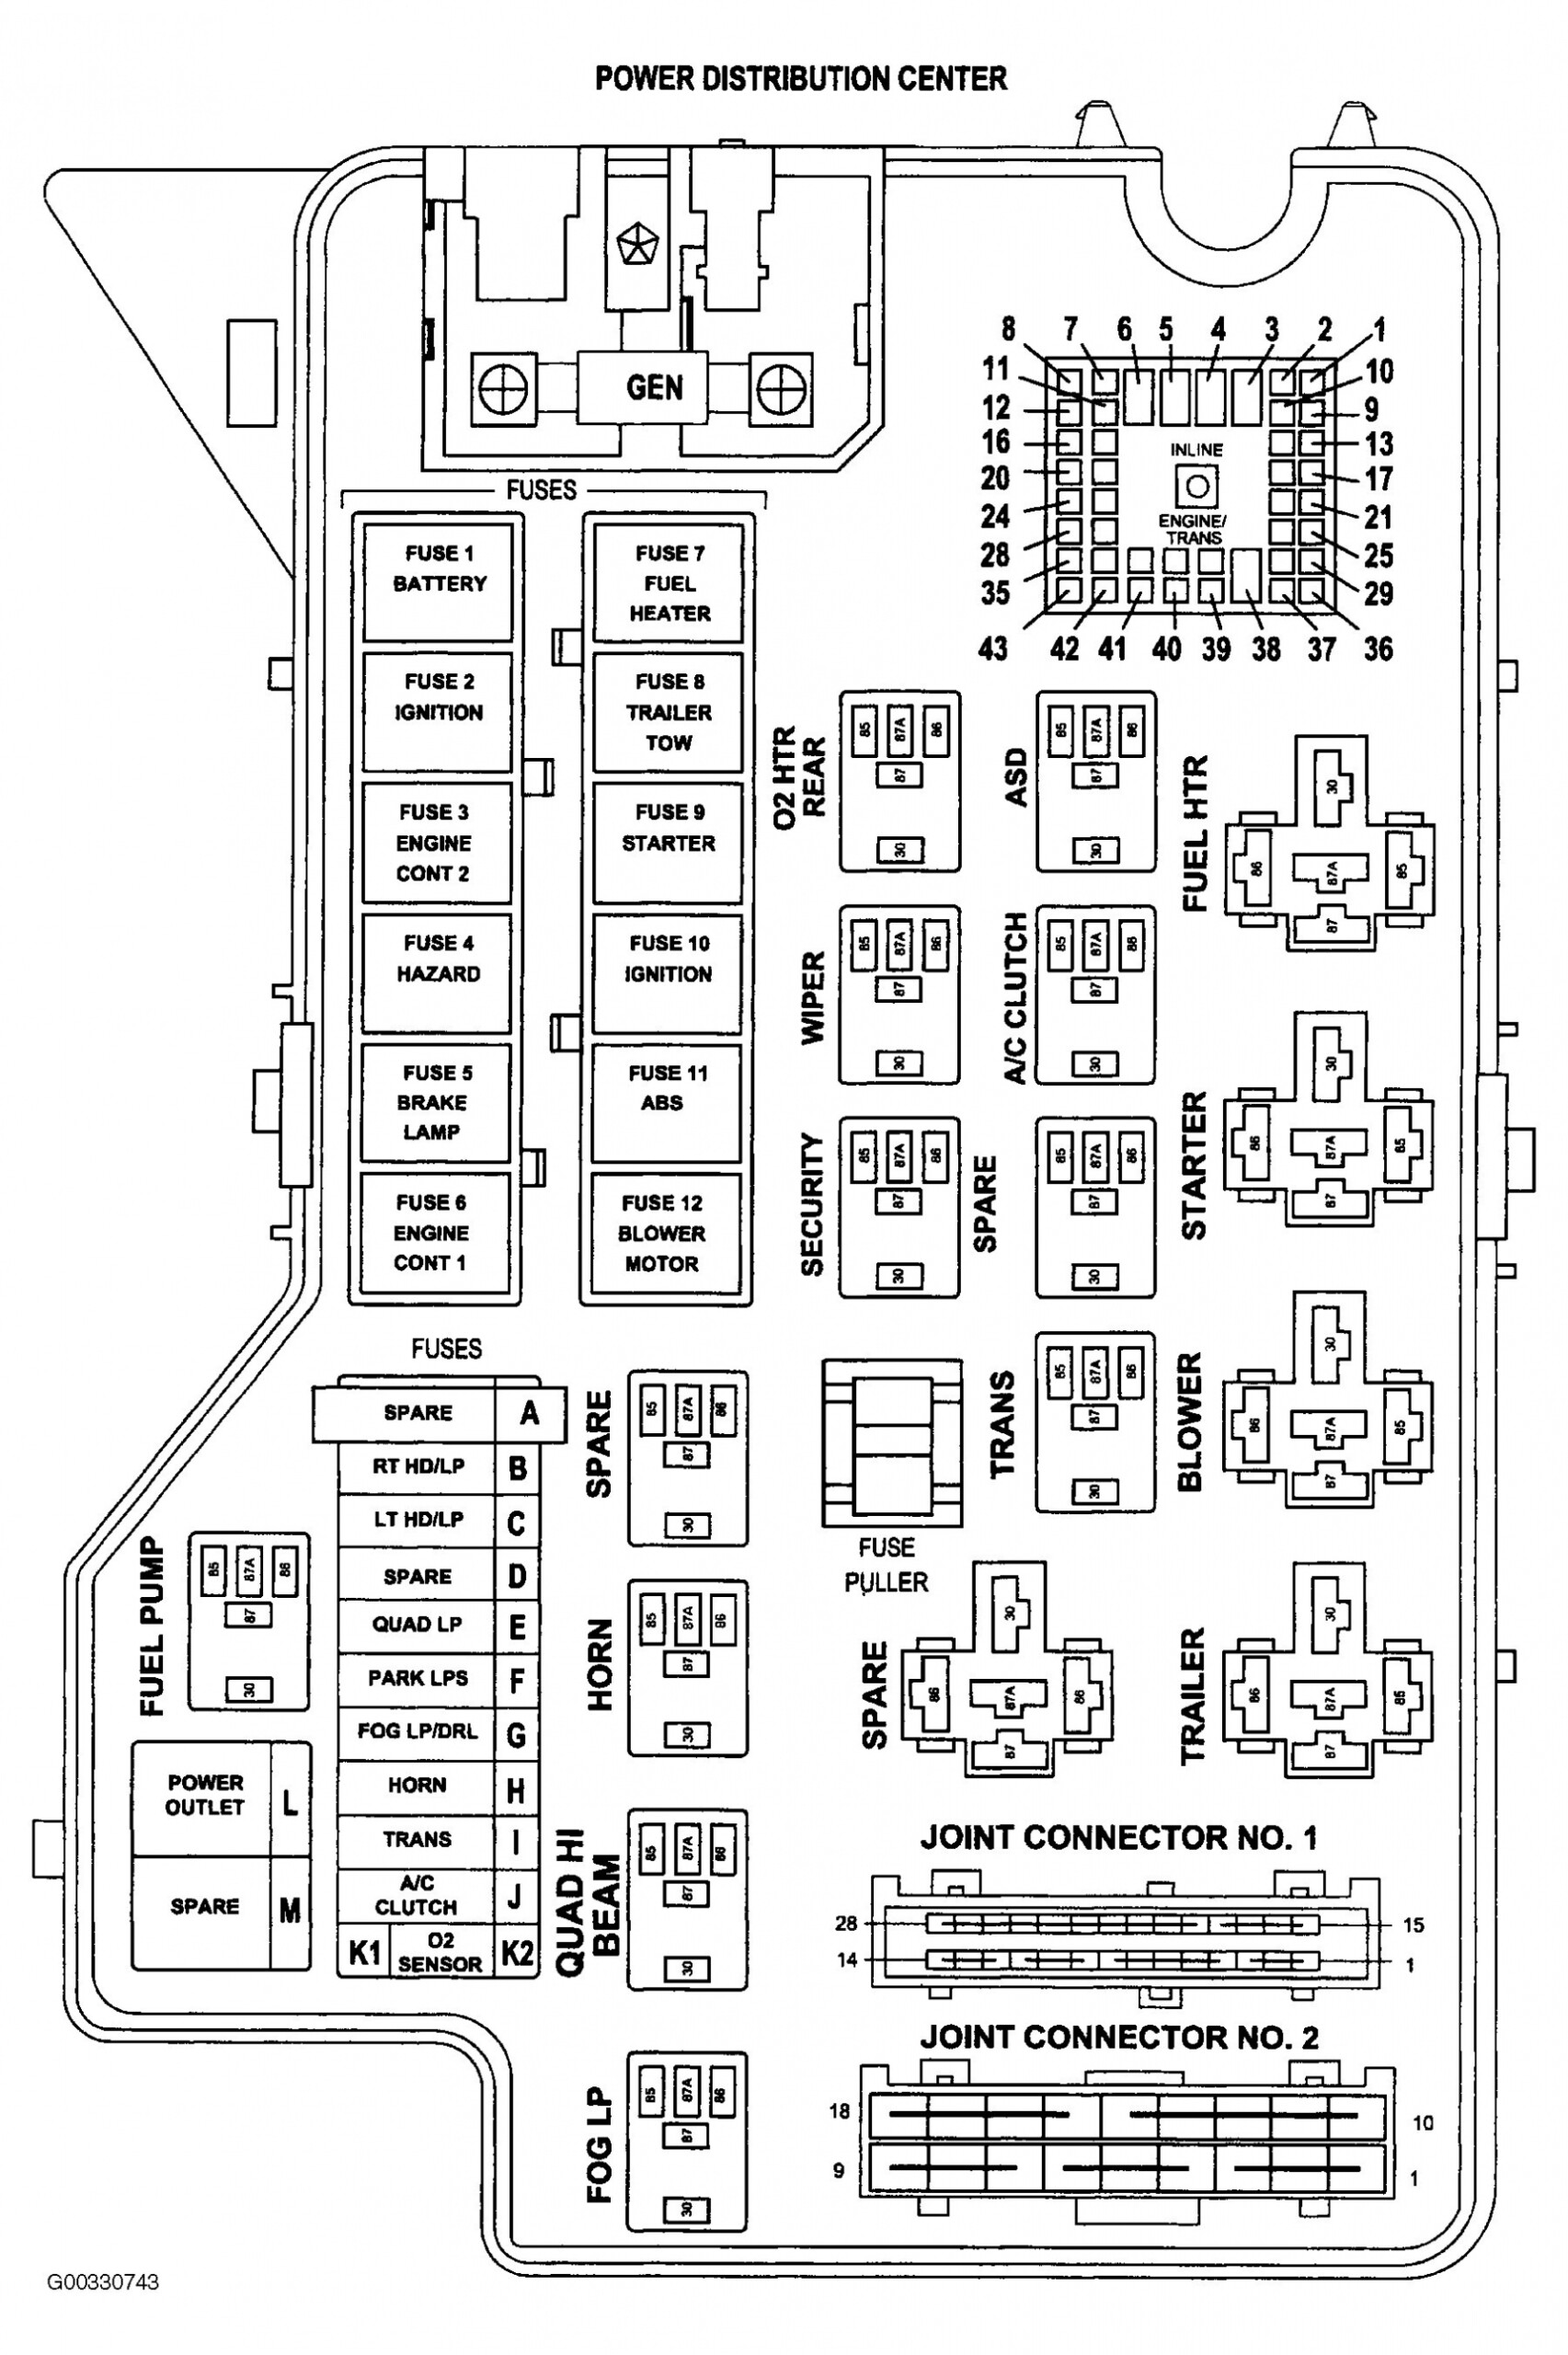 2014 Dodge Ram Wiring Diagram Cadician s Blog - 2007 Ram 1500 Radio Wiring Diagram